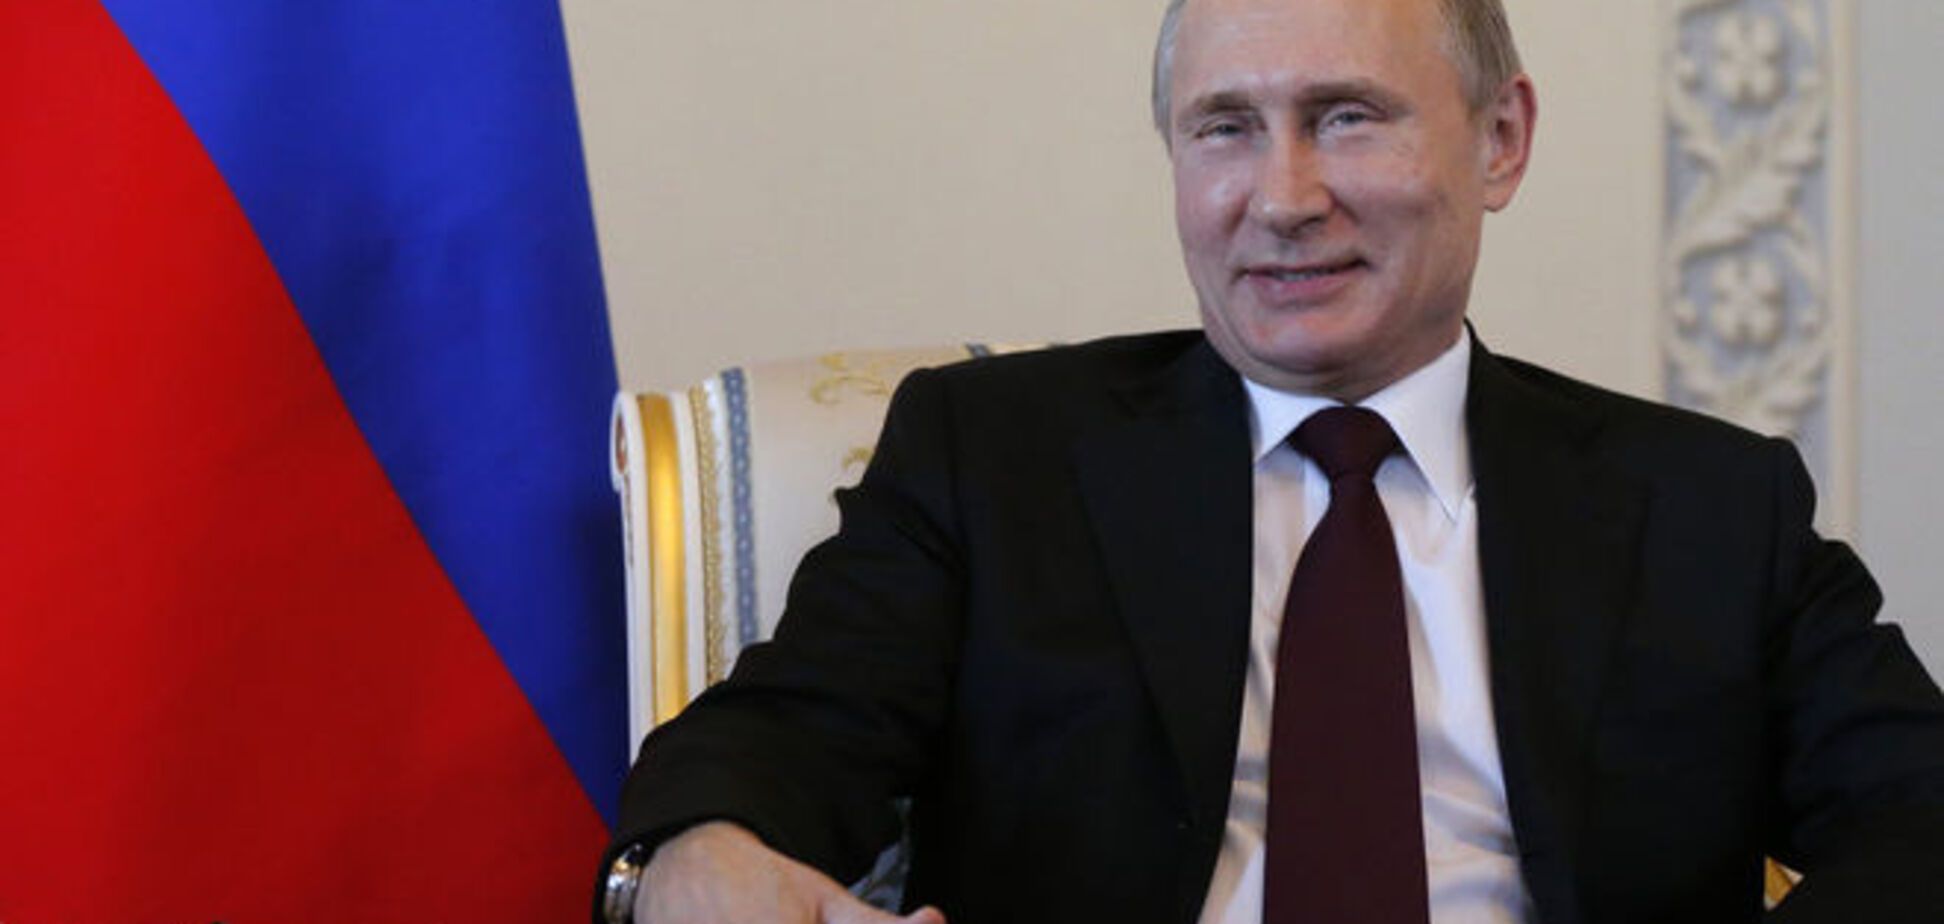 Запад просчитался с санкциями, на Путина они не действуют – Newsweek